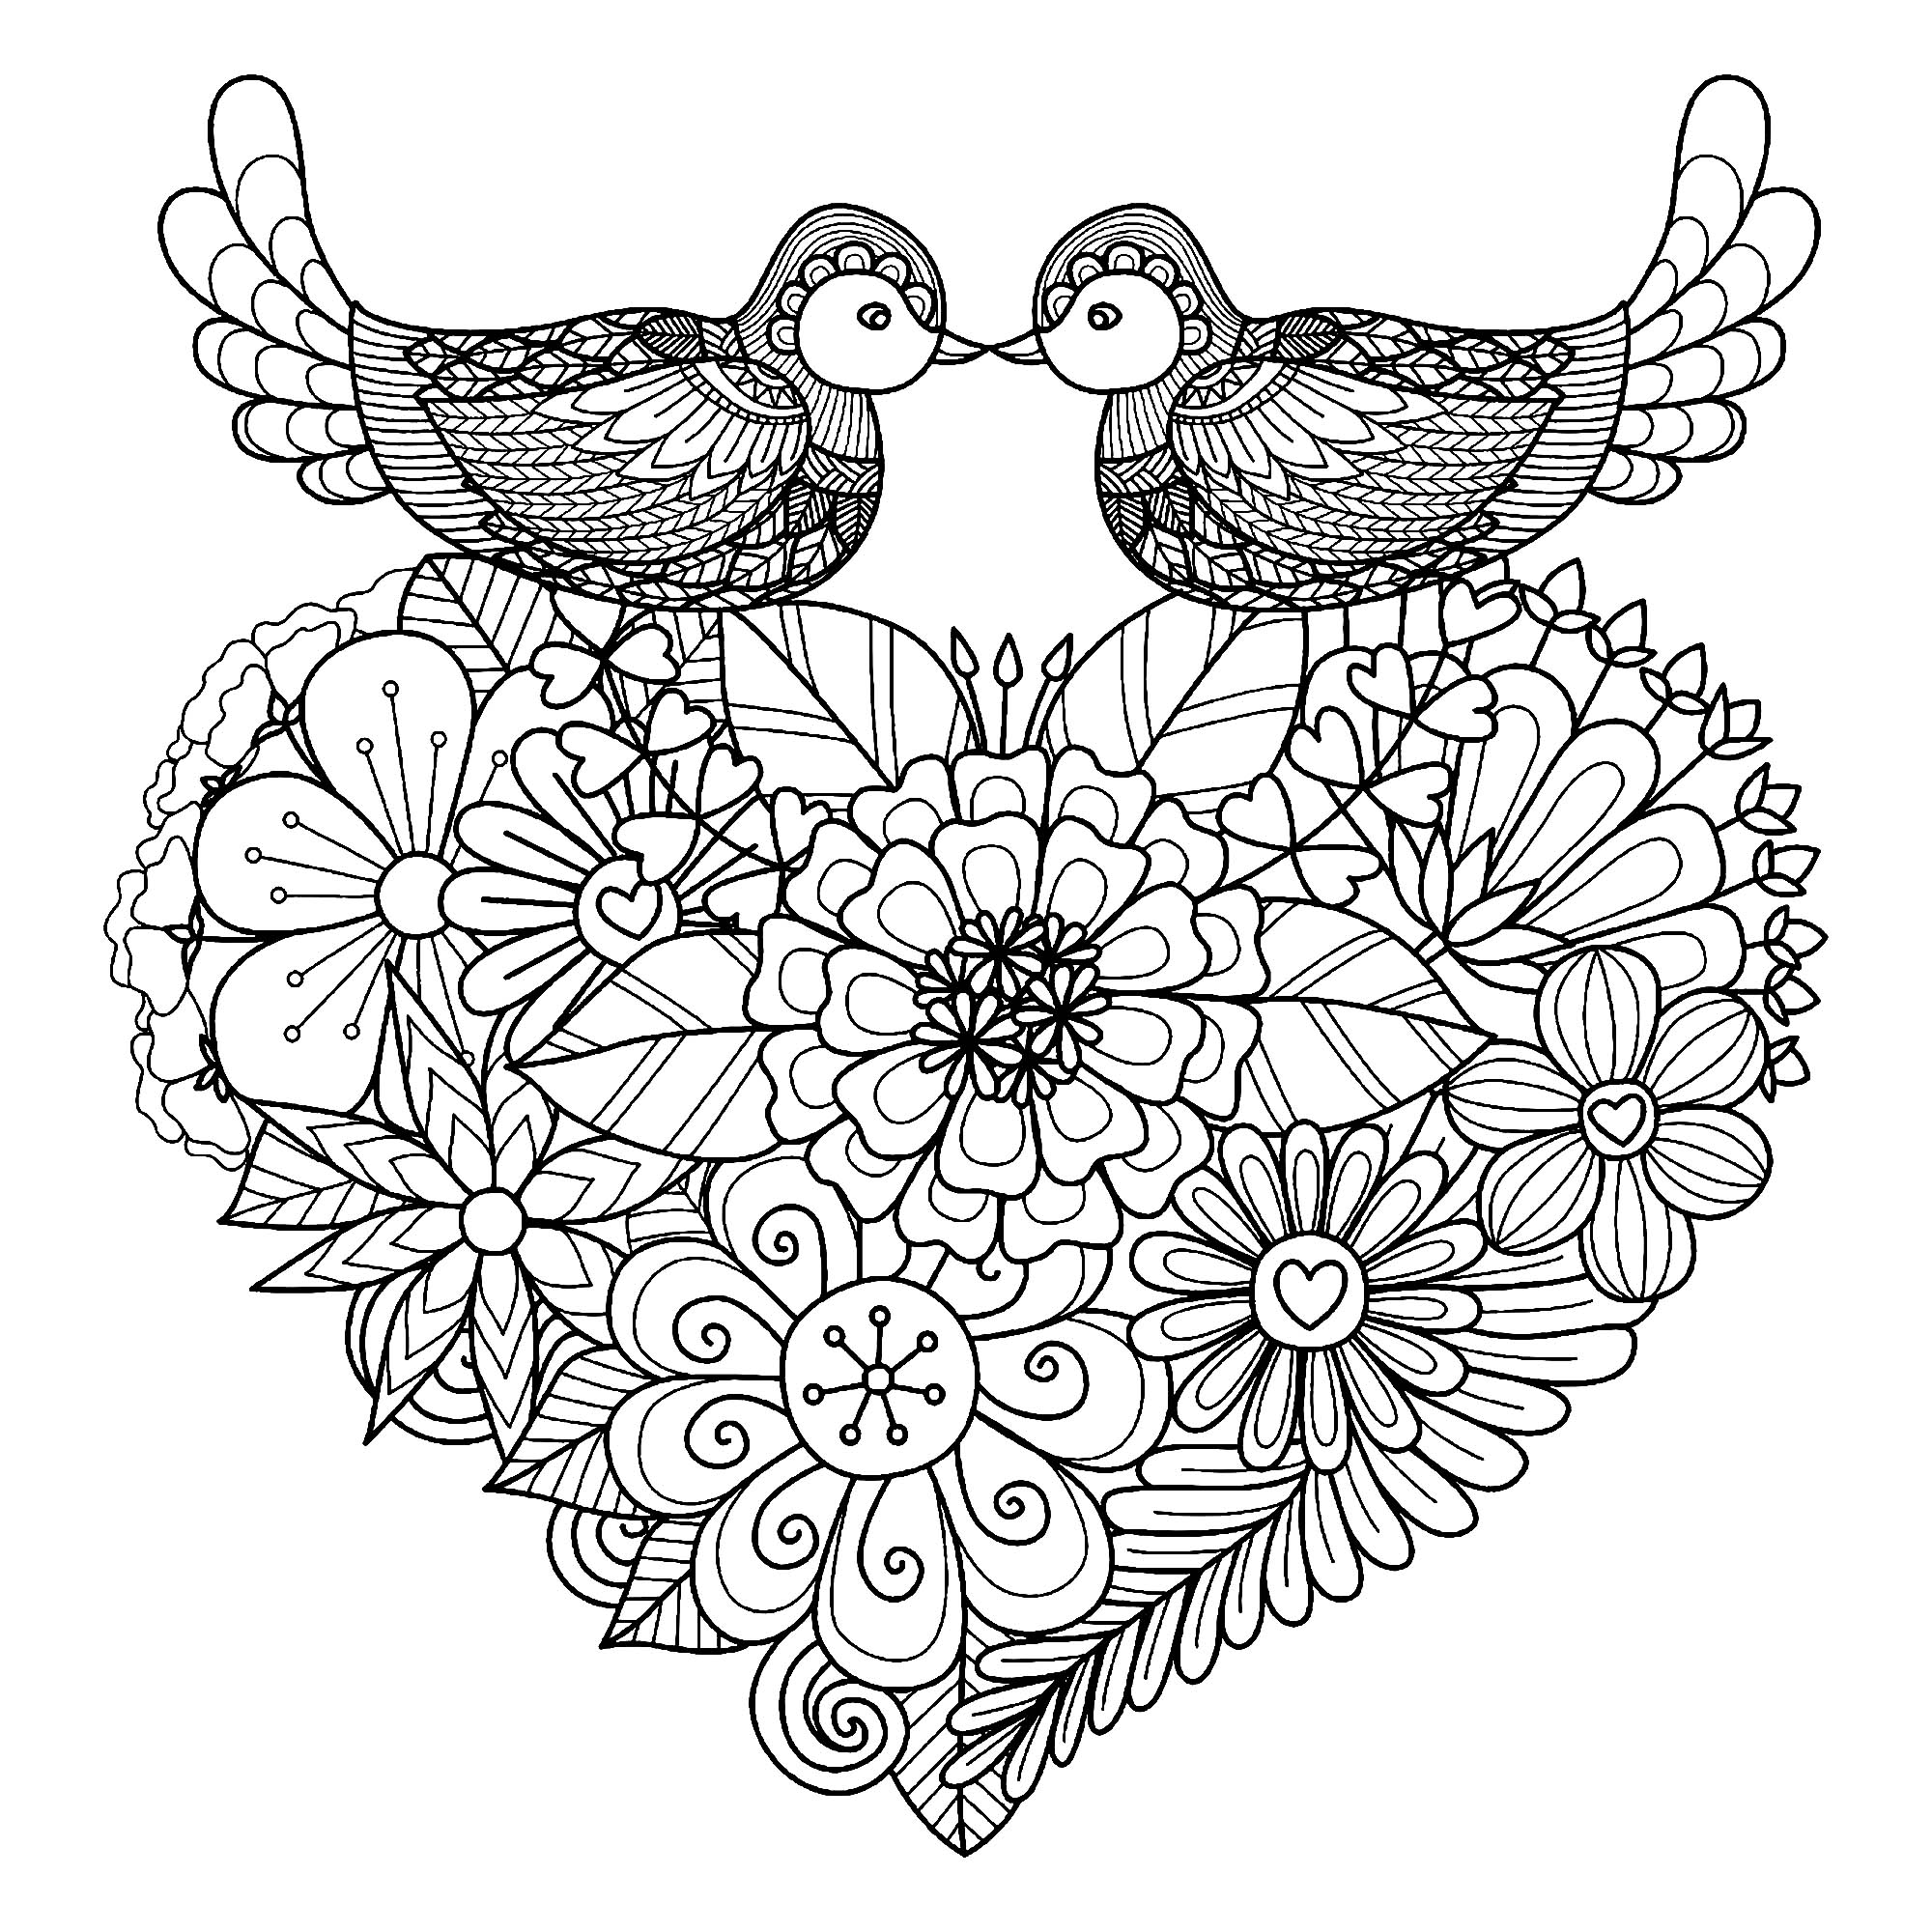 Color these two symmetrical birds resting on a heart full of original flowers, Artist : Bimdeedee   Source : 123rf